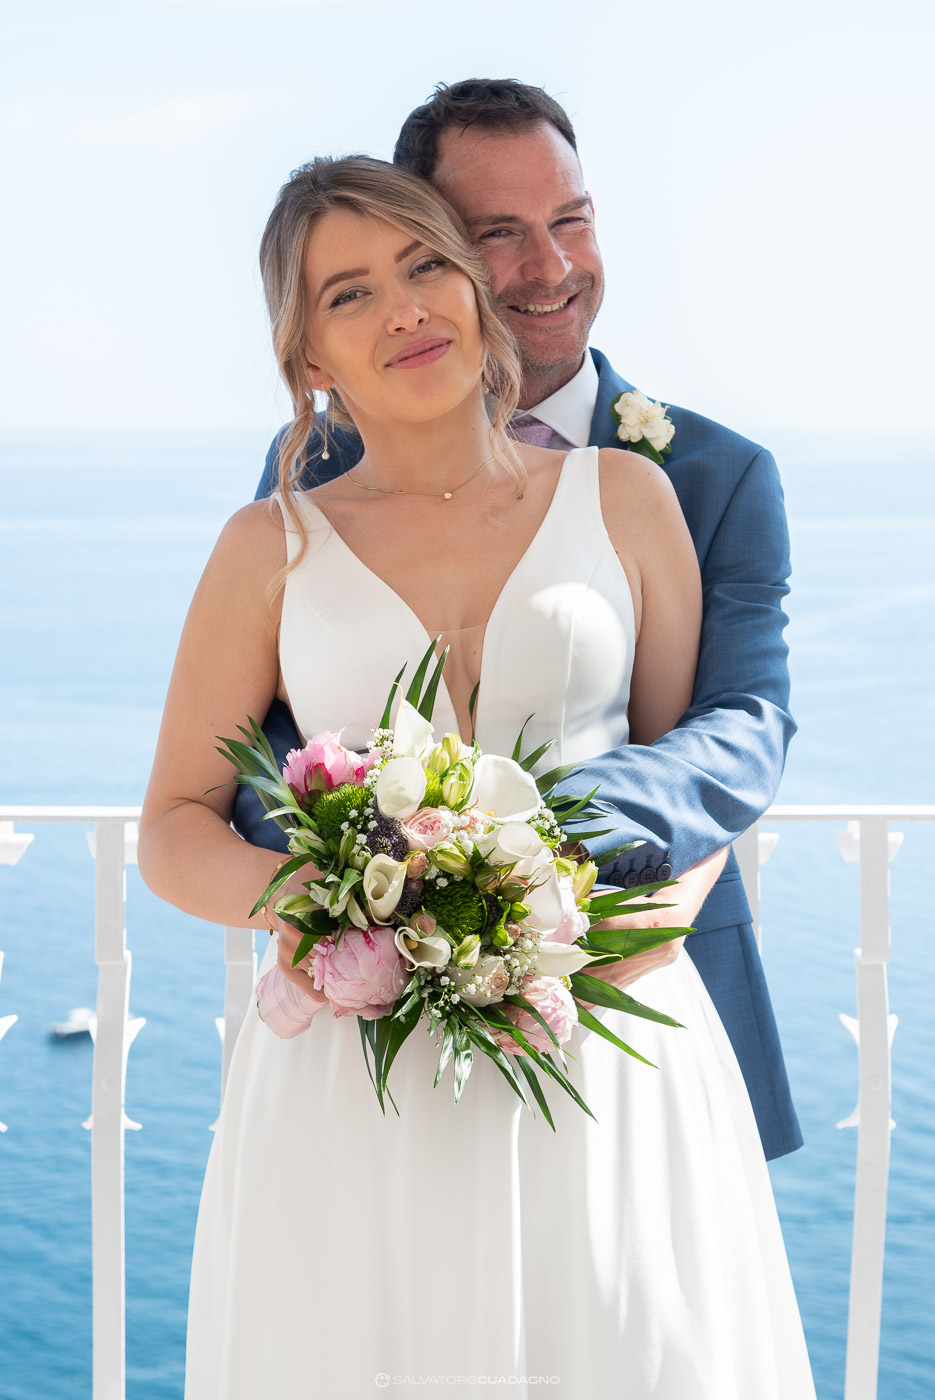 Wedding - Marriage - Family - Portrait photography - Positano - Amalfi Coast 